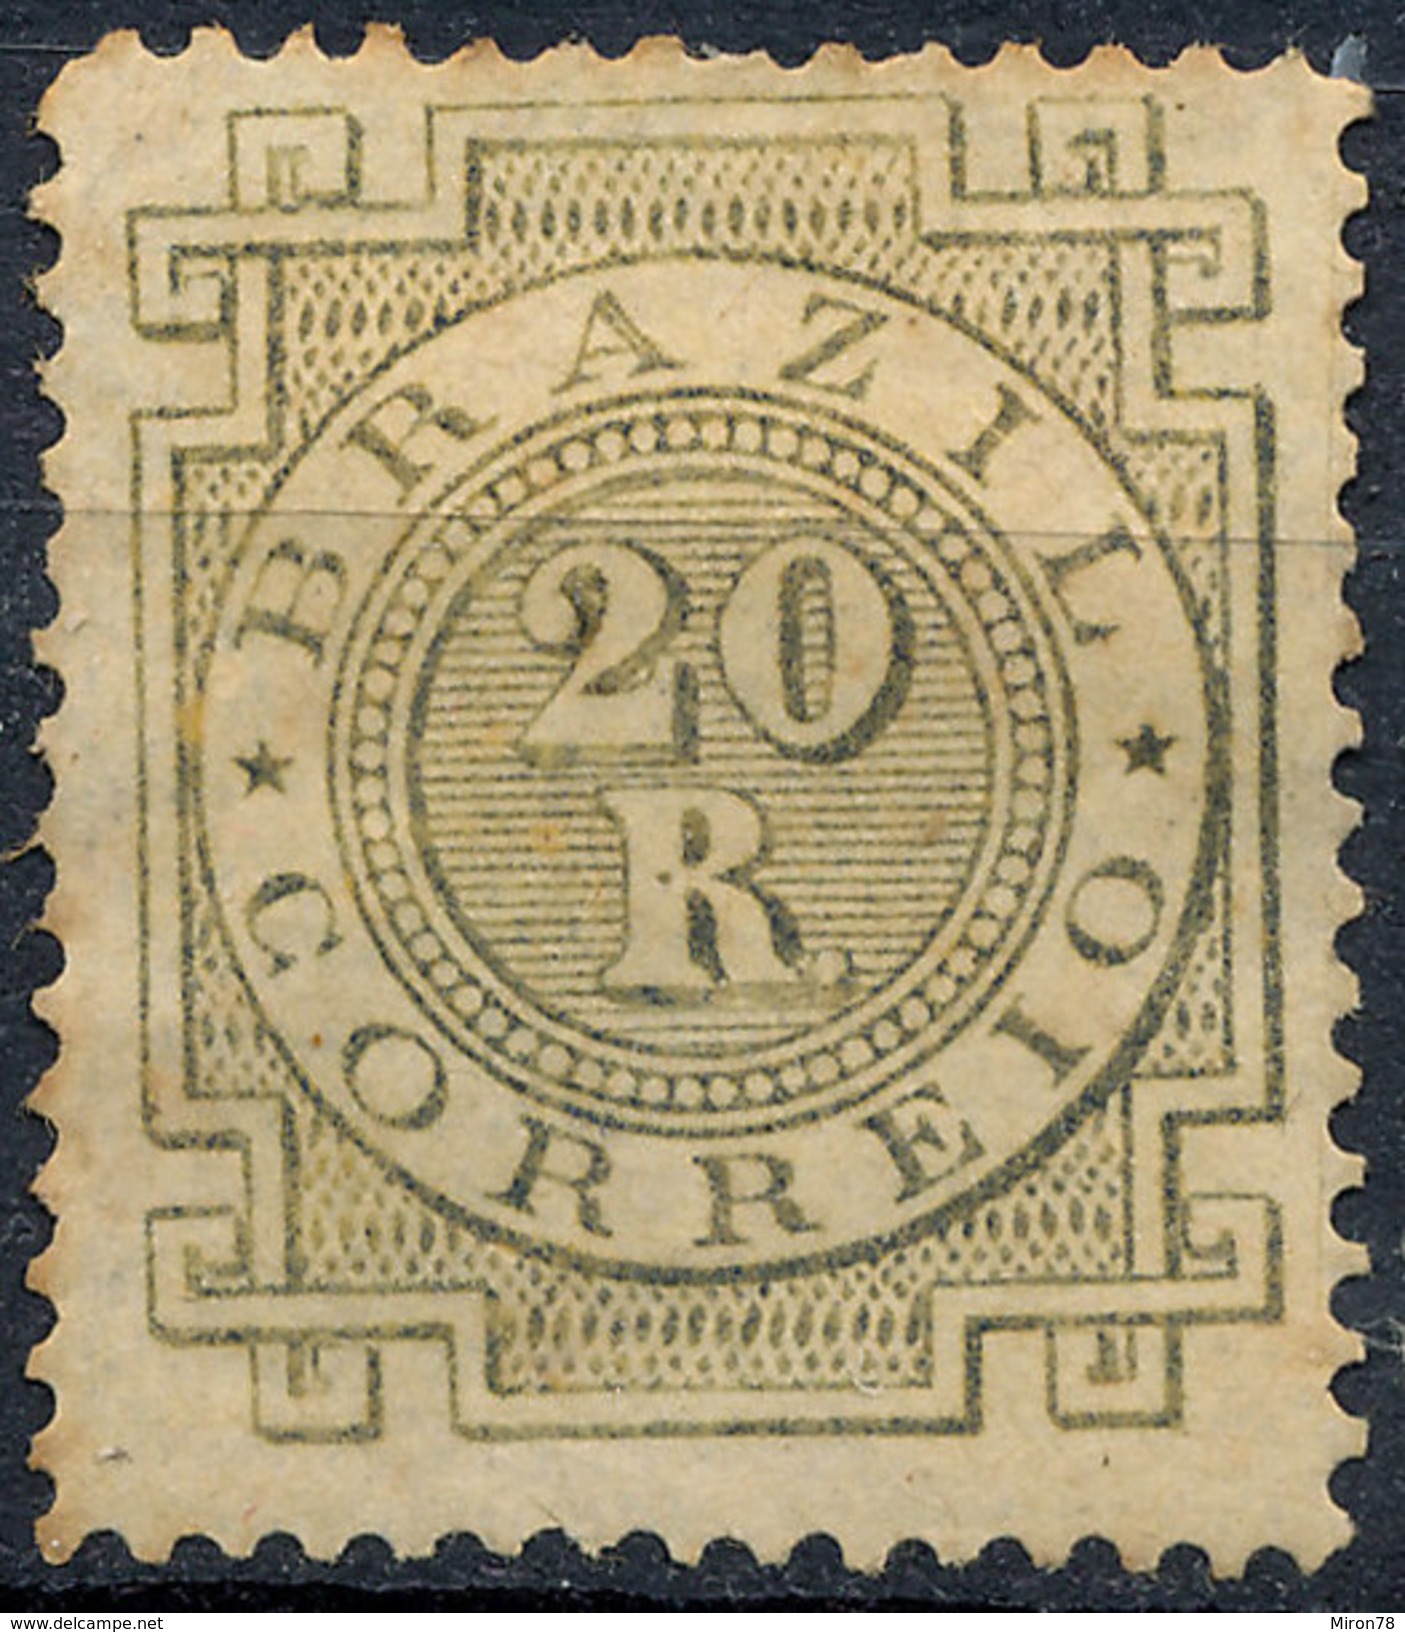 Stamp Brazil 1884  Scott #87 20 Reis Lot#68 - Unused Stamps